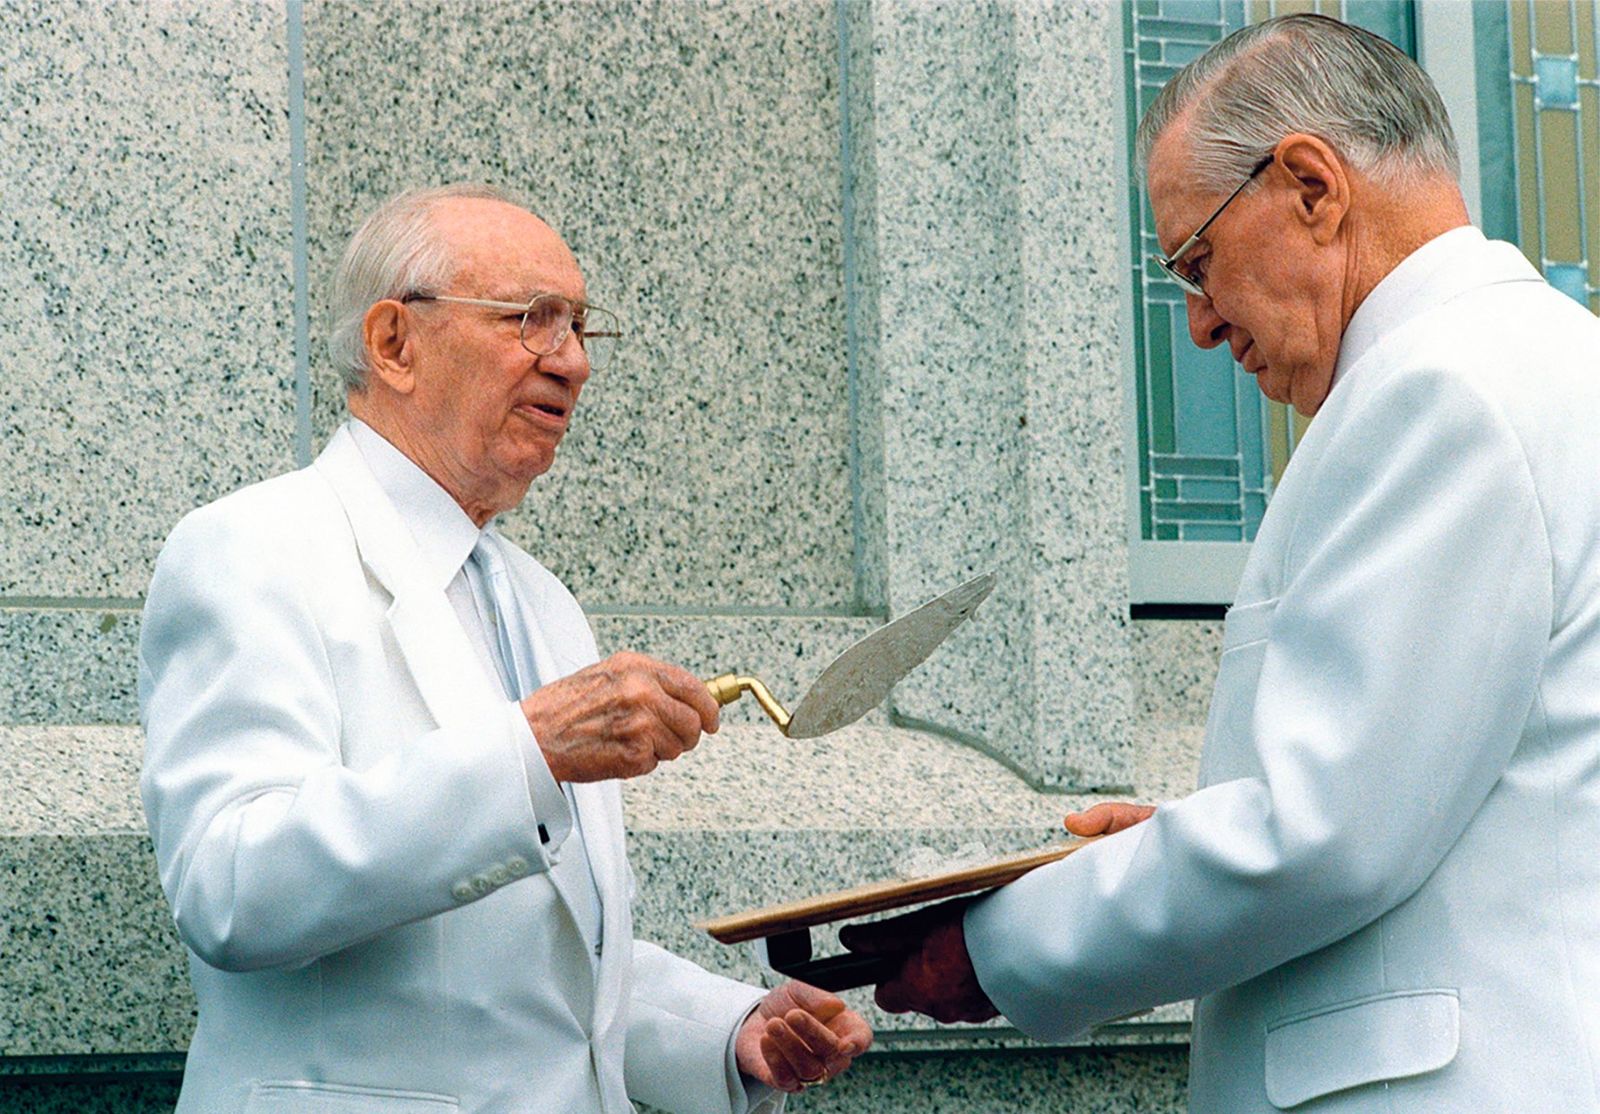 President Gordon B. Hinckley prepares to seal the cornerstone at a temple dedication ceremony.